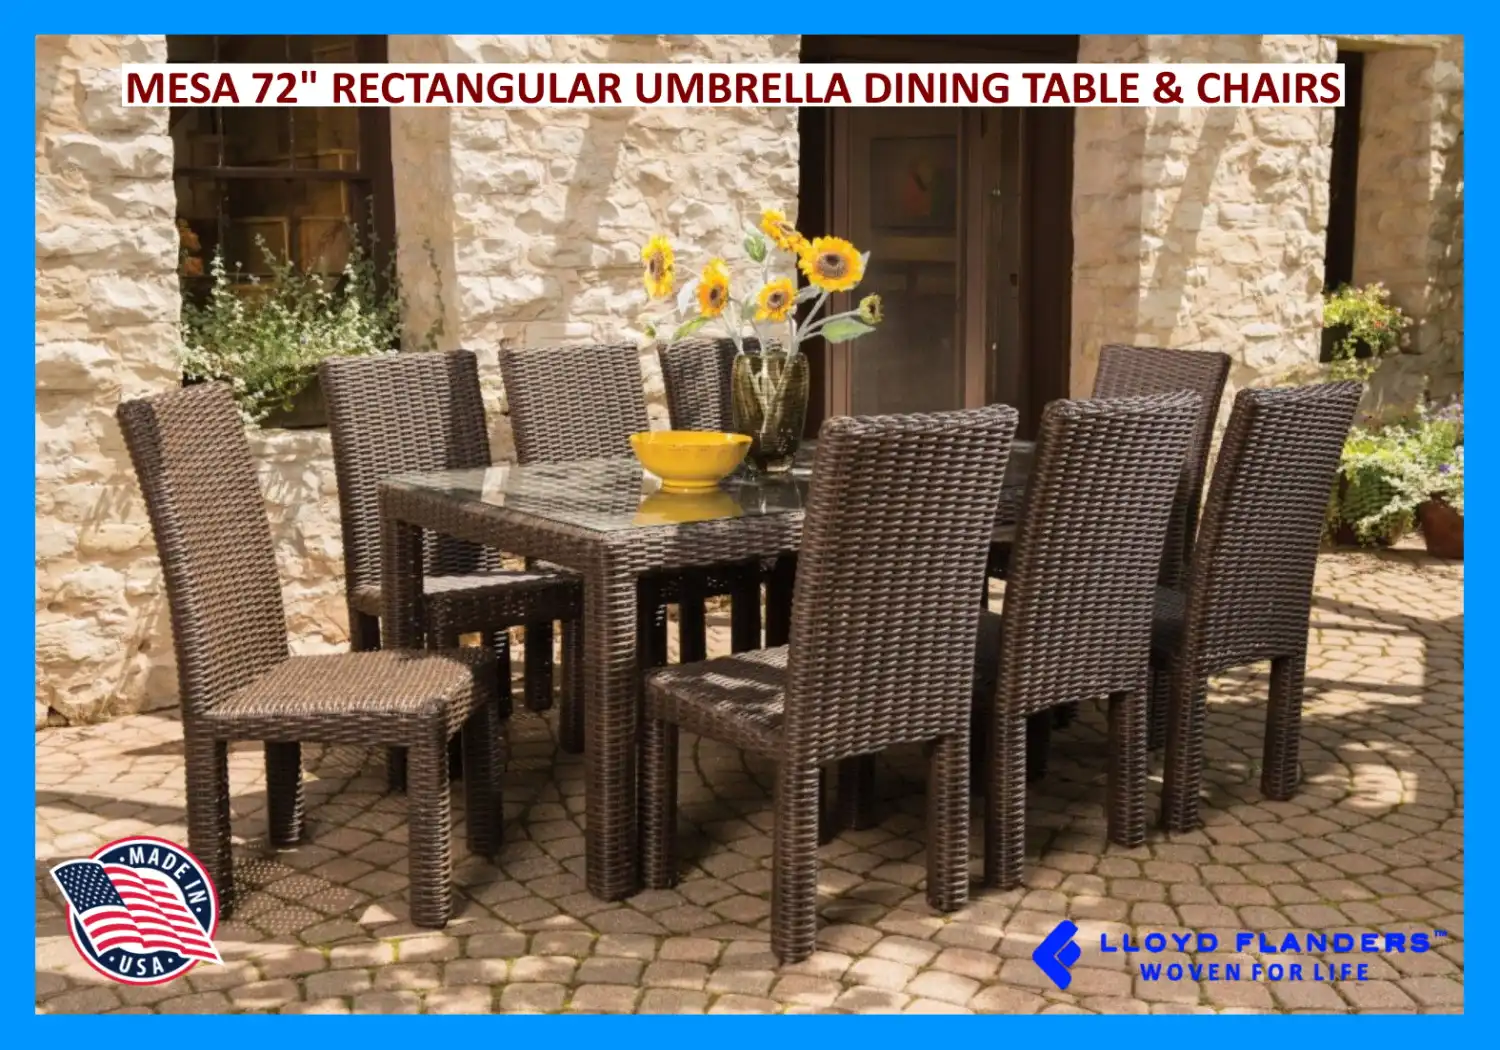 MESA 72" RECTANGULAR UMBRELLA DINING TABLE & CHAIRS